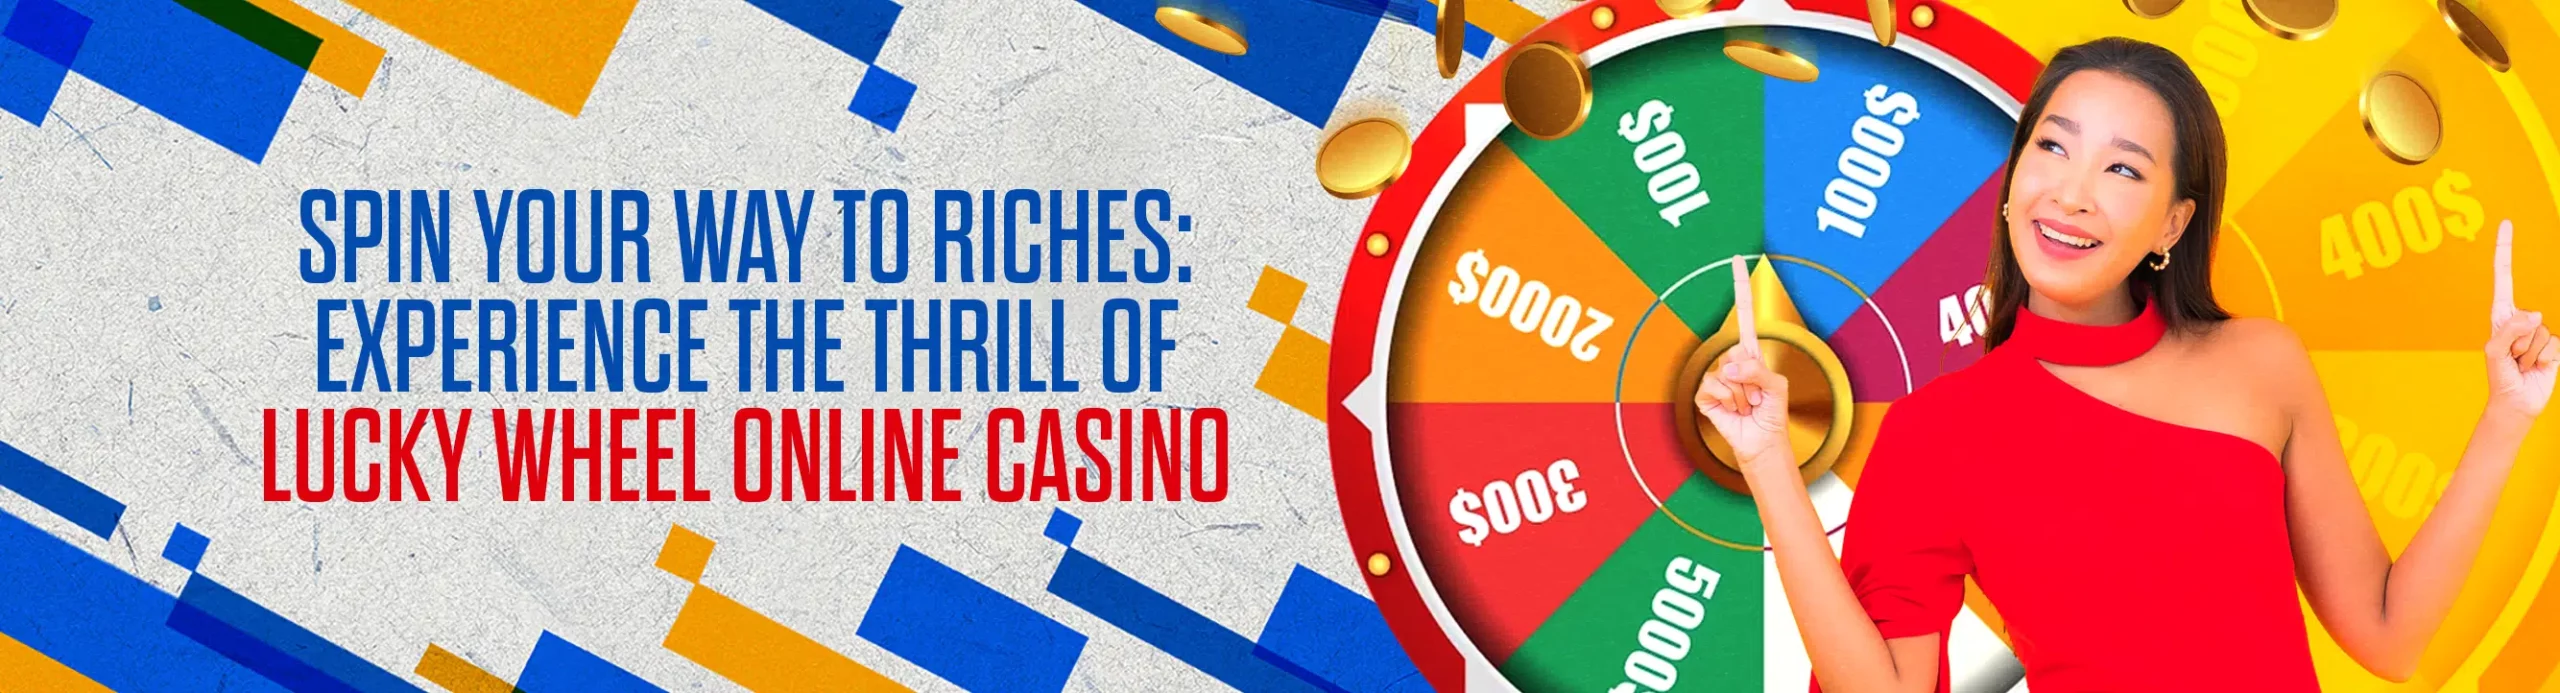 okbet lucky wheel online casino